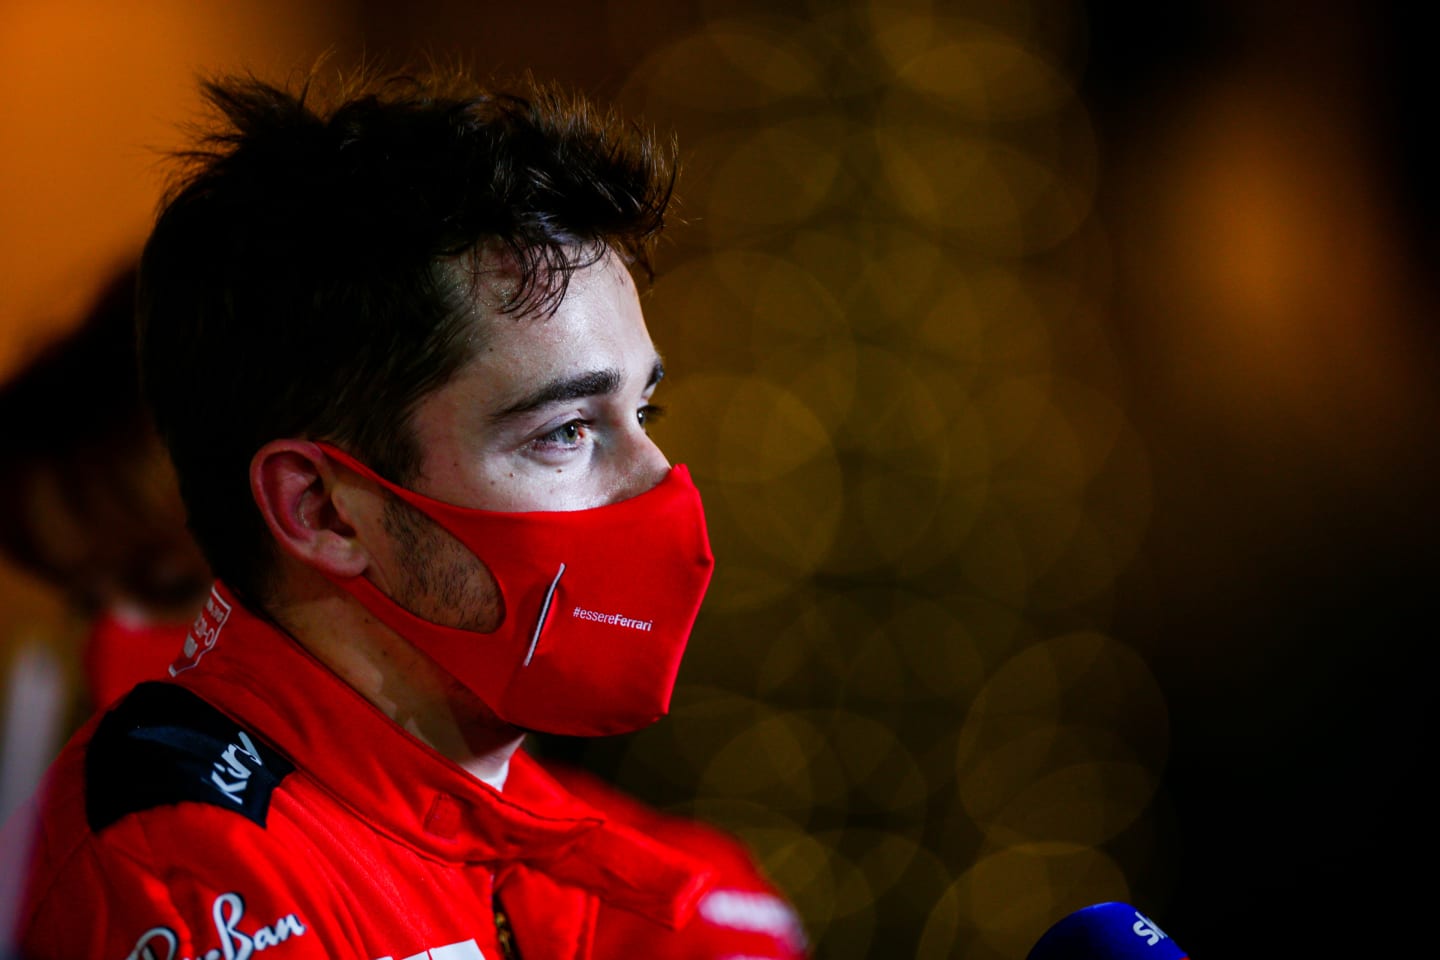 BAHRAIN, BAHRAIN - DECEMBER 05: Charles Leclerc of Ferrari and France  during qualifying ahead of